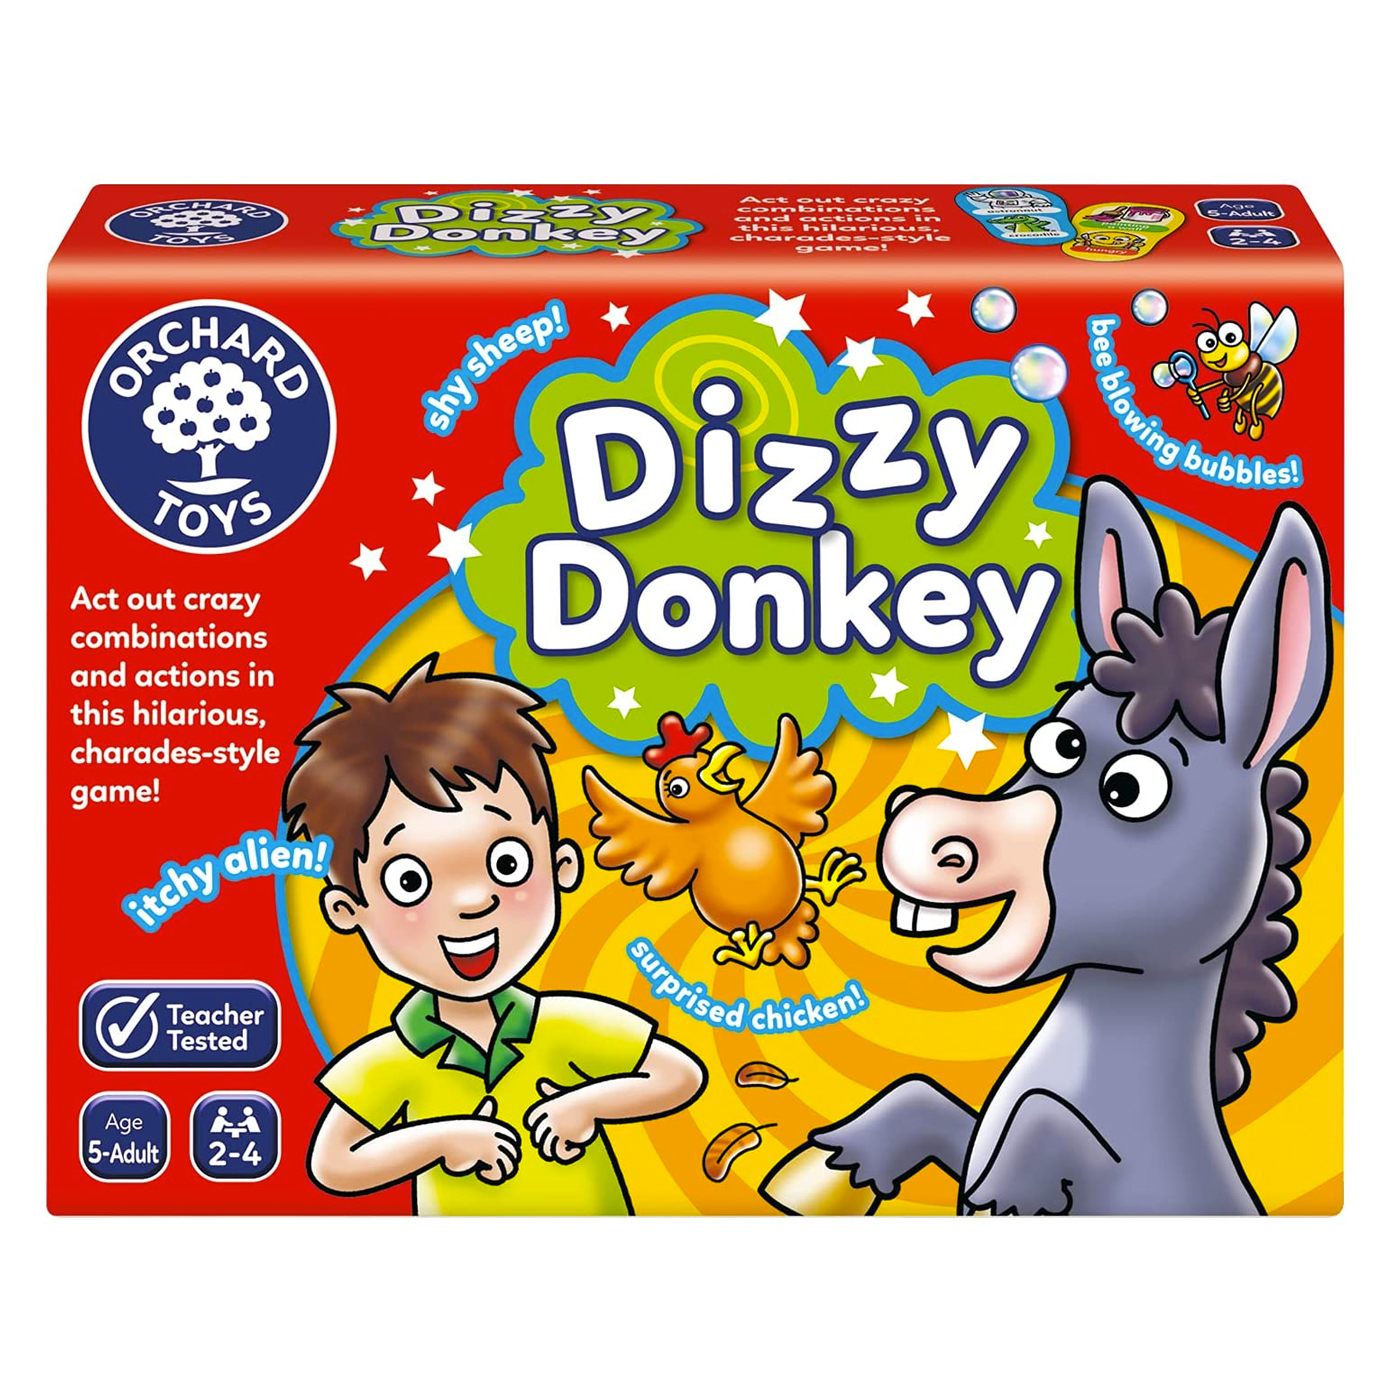 ORCHARD TOYS Orchard Toys Dizzy Donkey +5 Yaş - Yetişkin